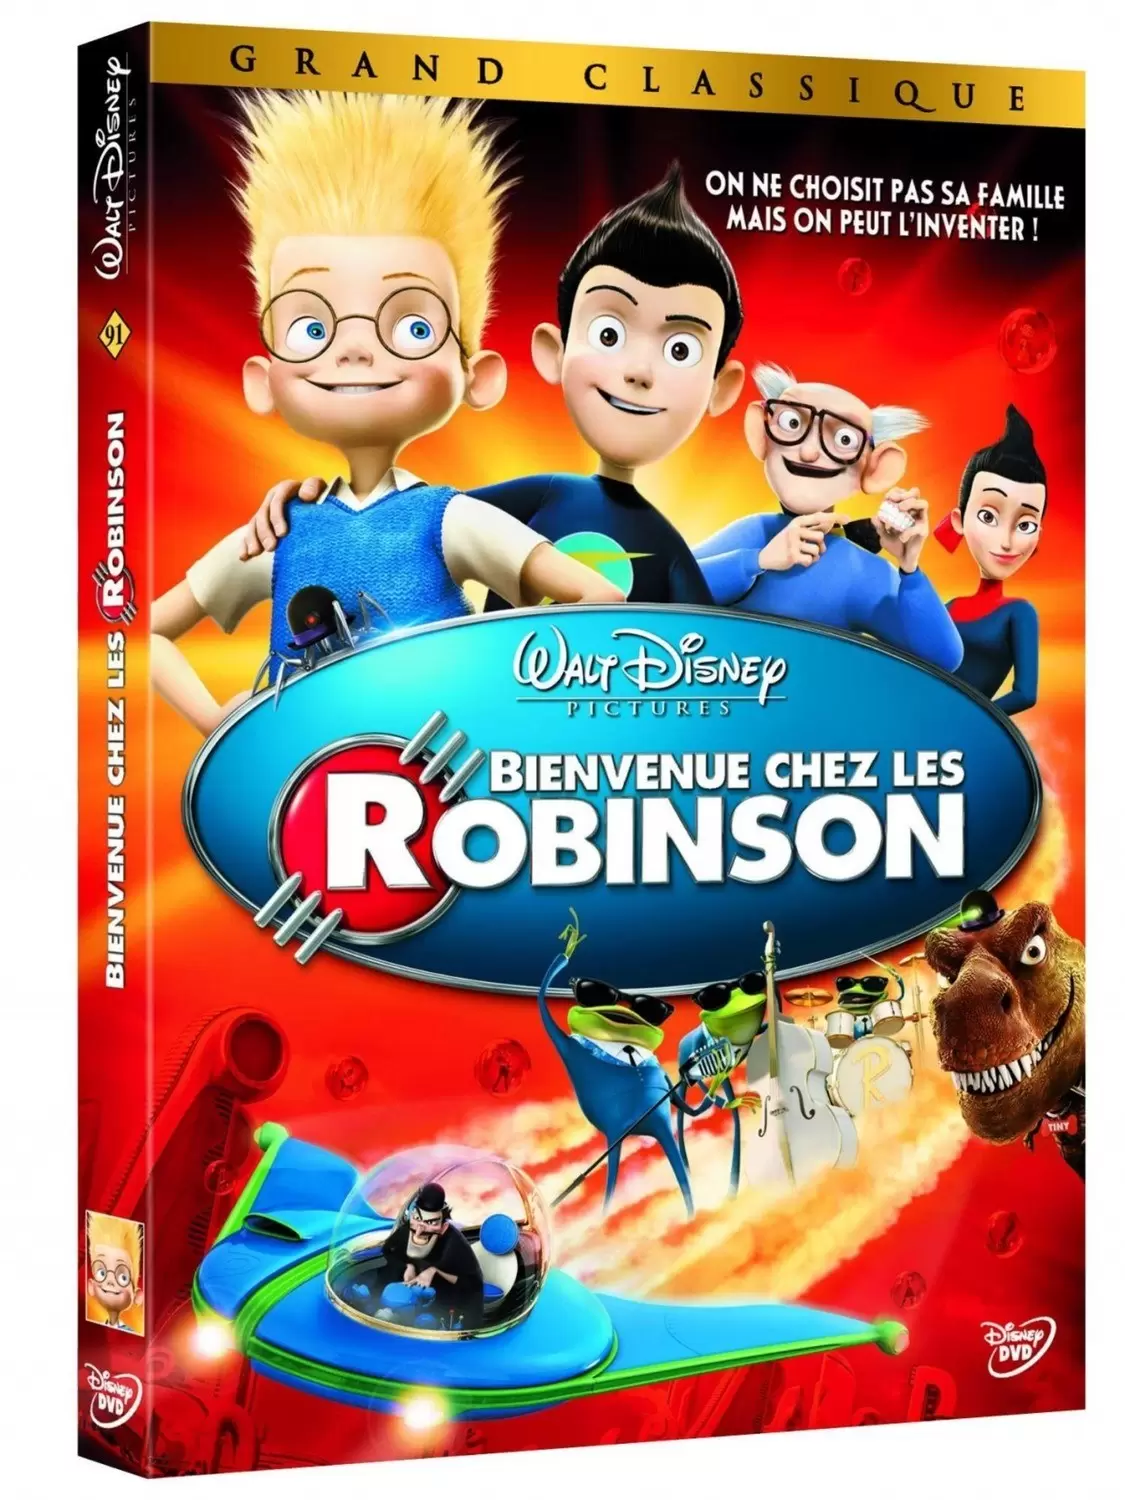 Les grands classiques de Disney en DVD - Bienvenue chez les Robinson